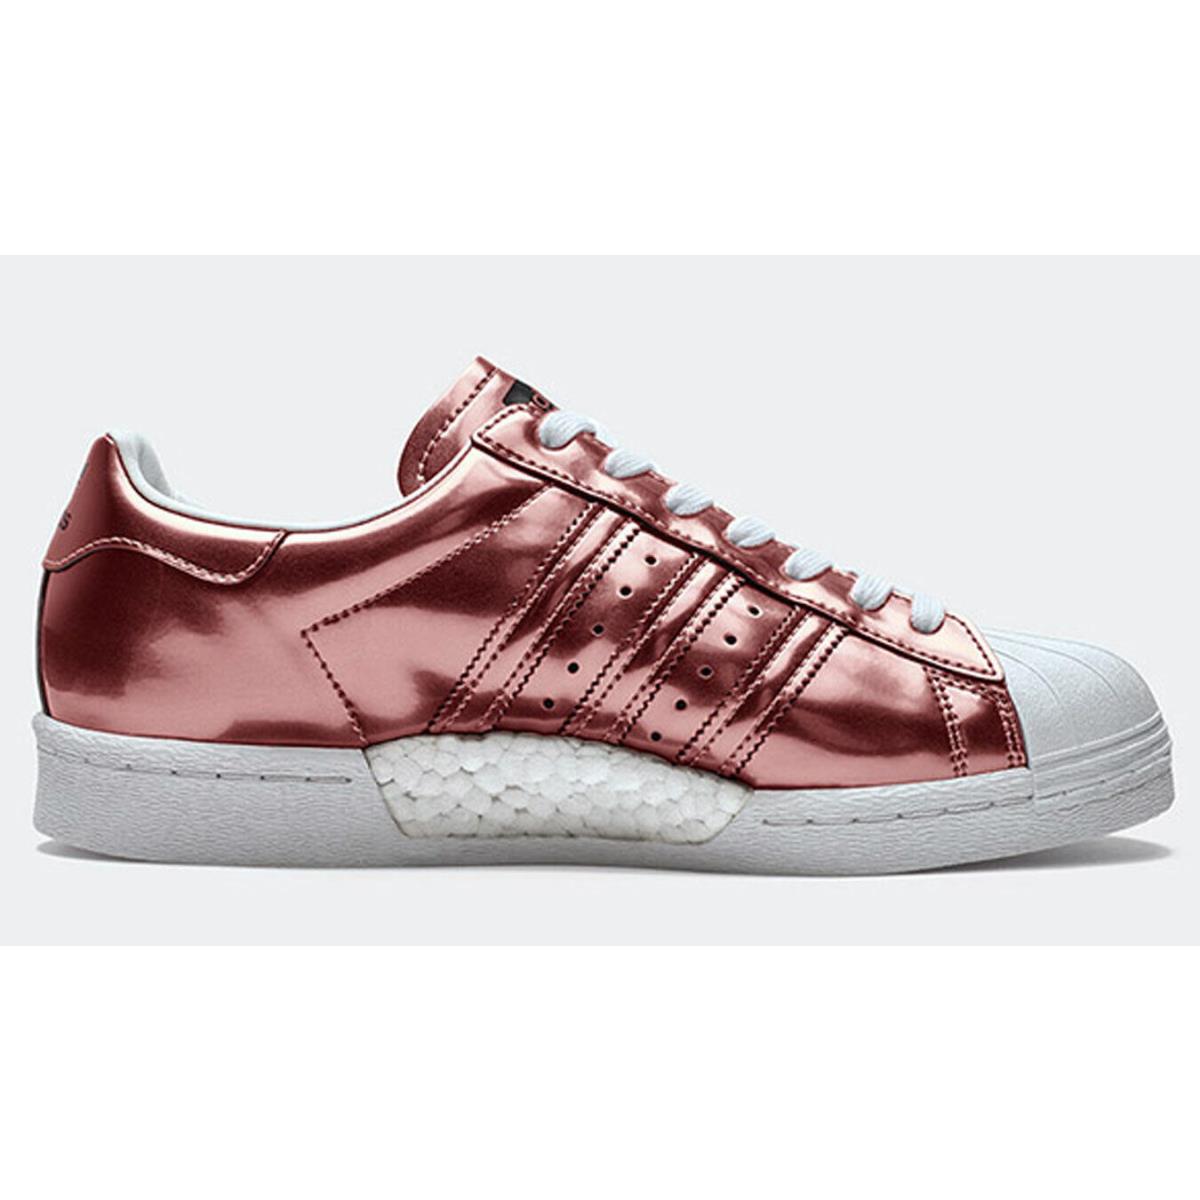 Adidas Originals Superstar Boost Women s Shoes BB2270 Copper Metallic Size 7.5